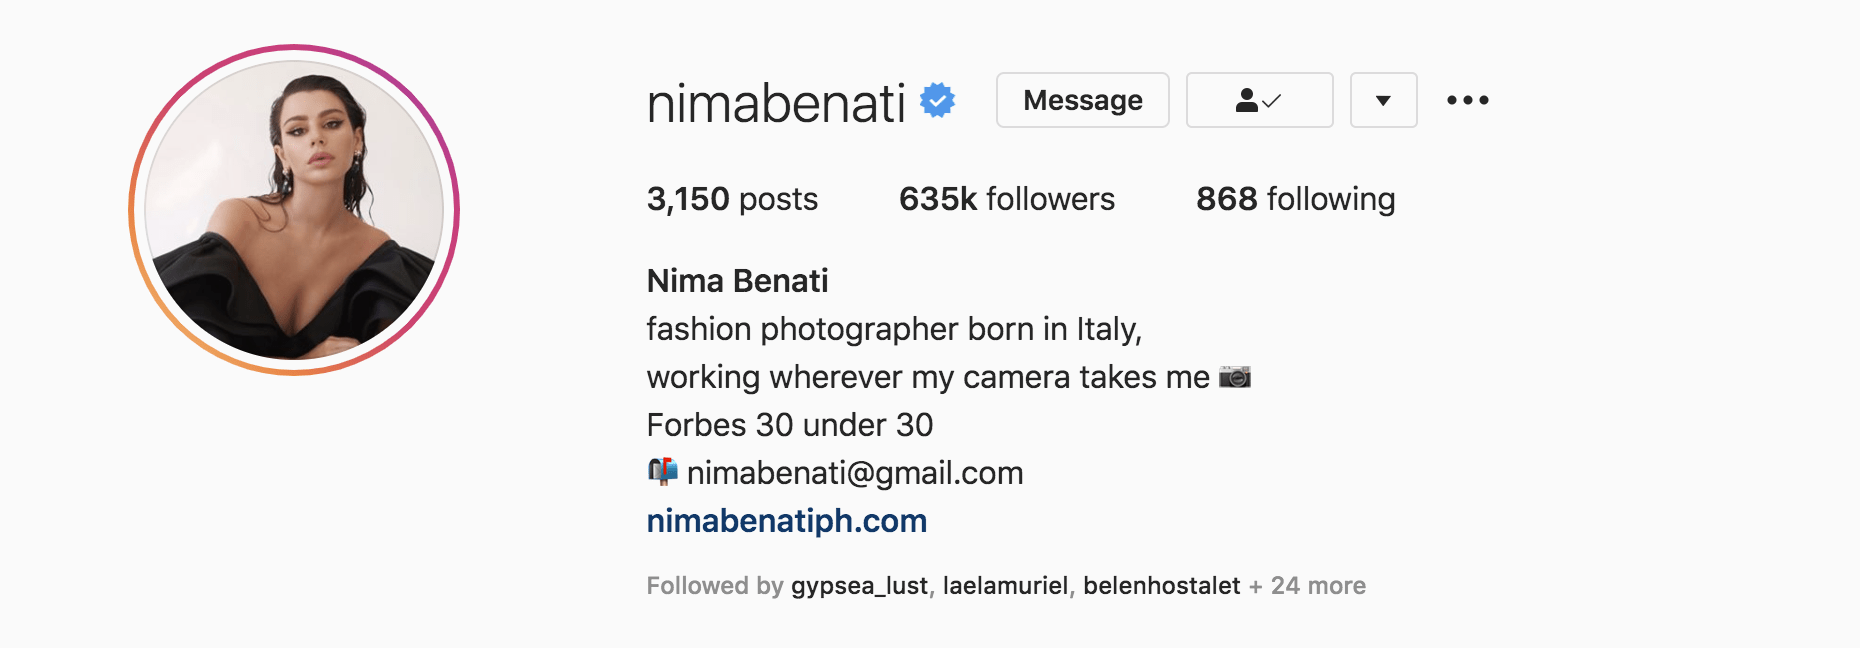 Top Fashion Influencers - Nima Benati